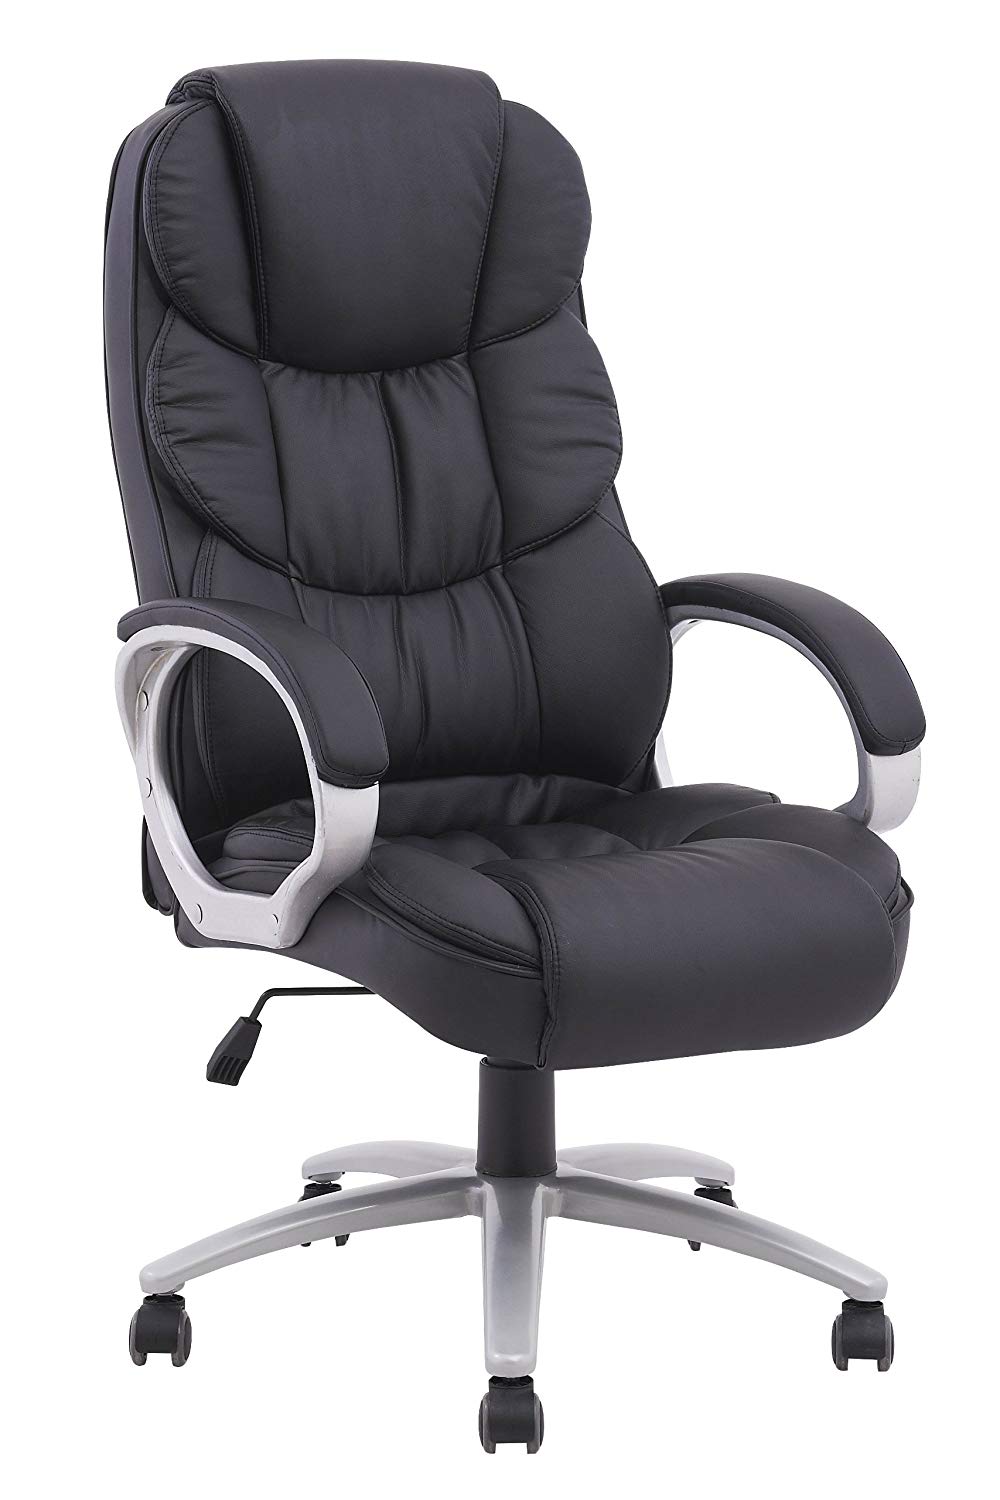 BestOffice Office Chair